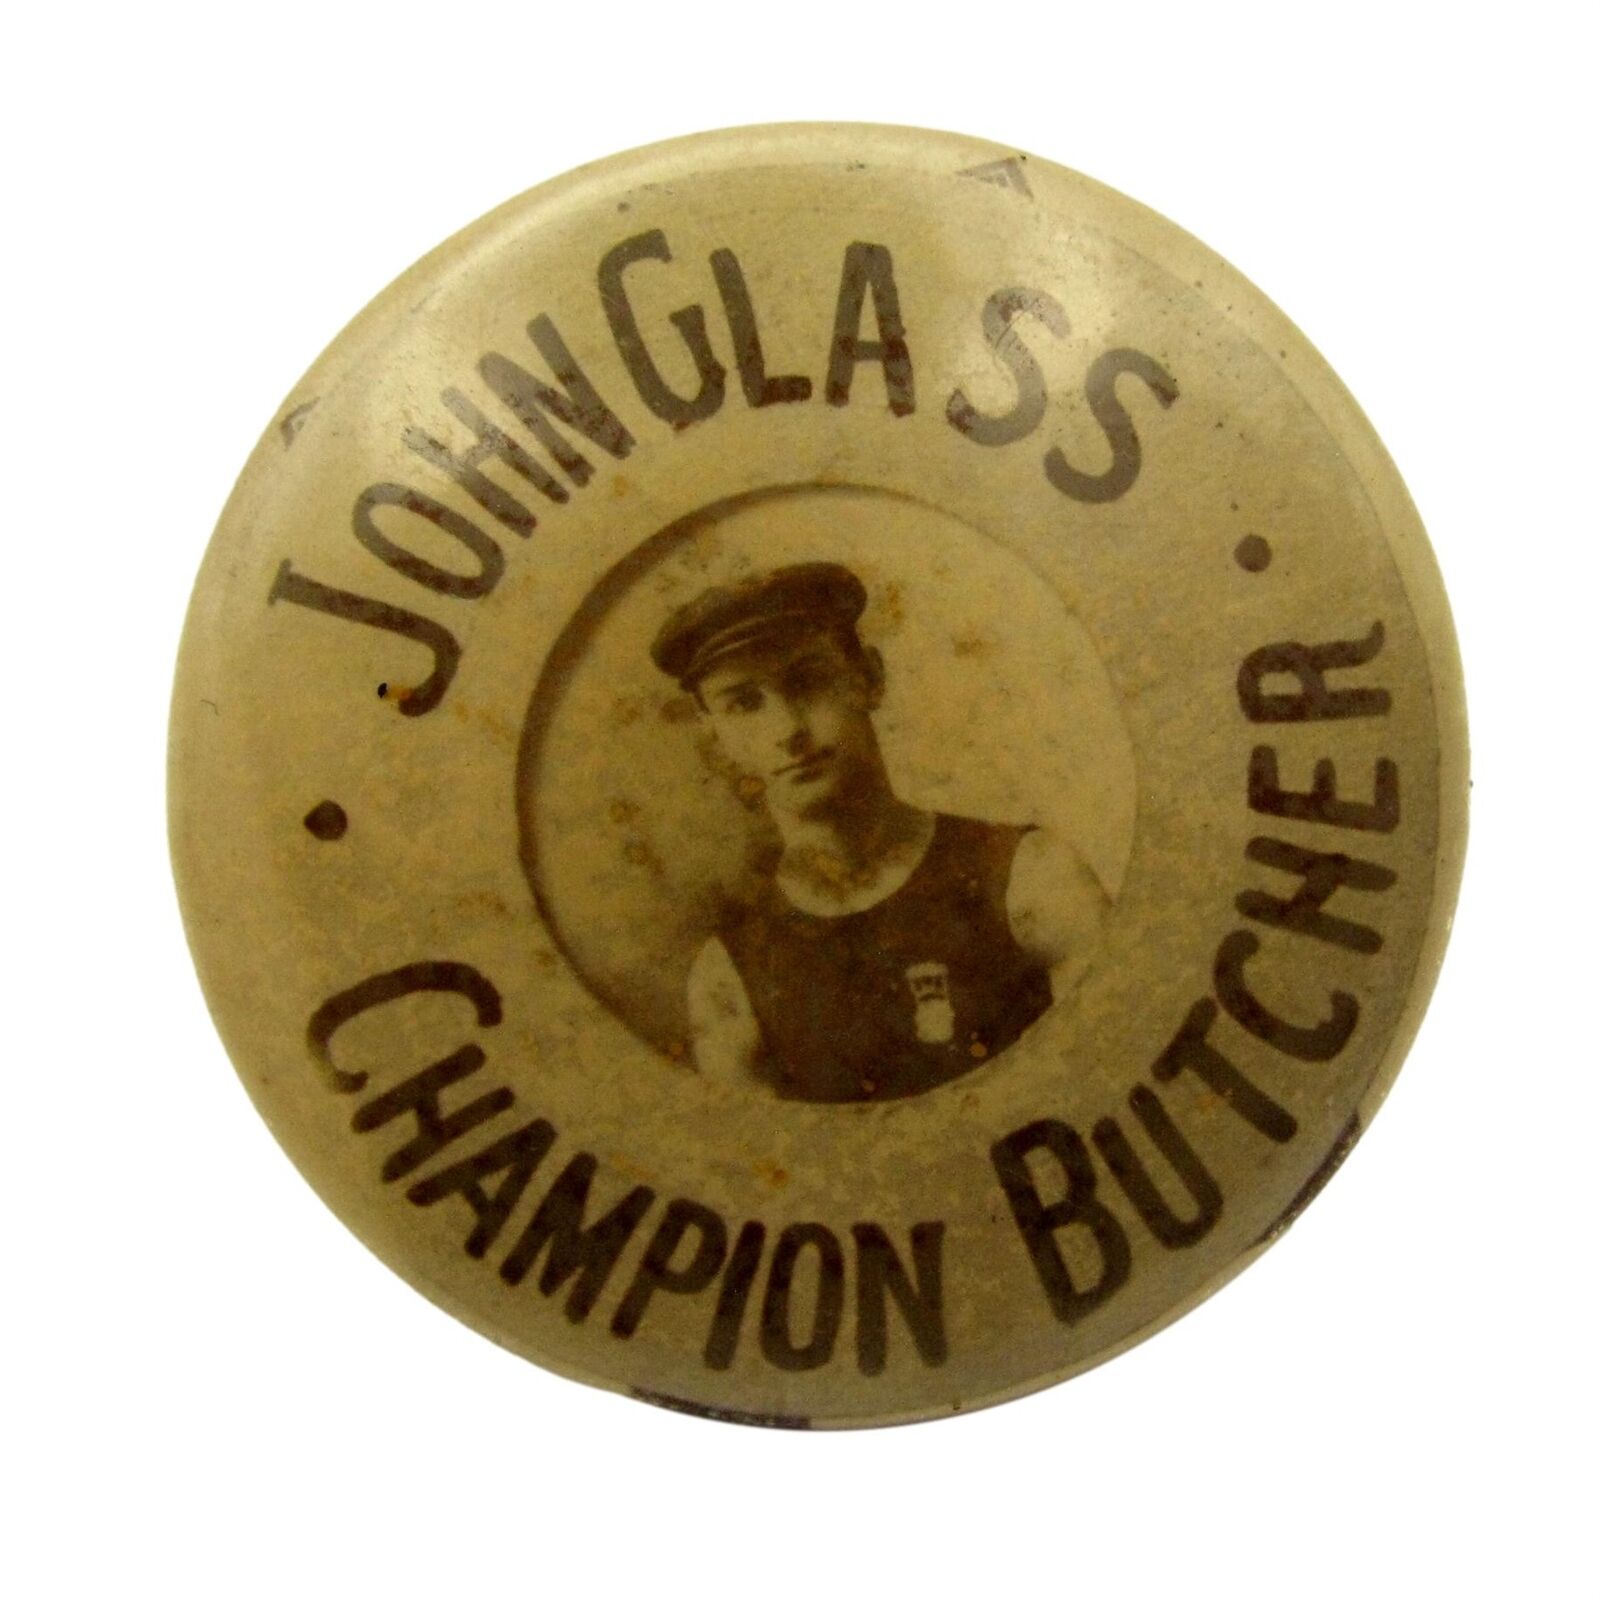 Antique John Glass Champion Butcher Advertising Celluloid Pinback Button Pin